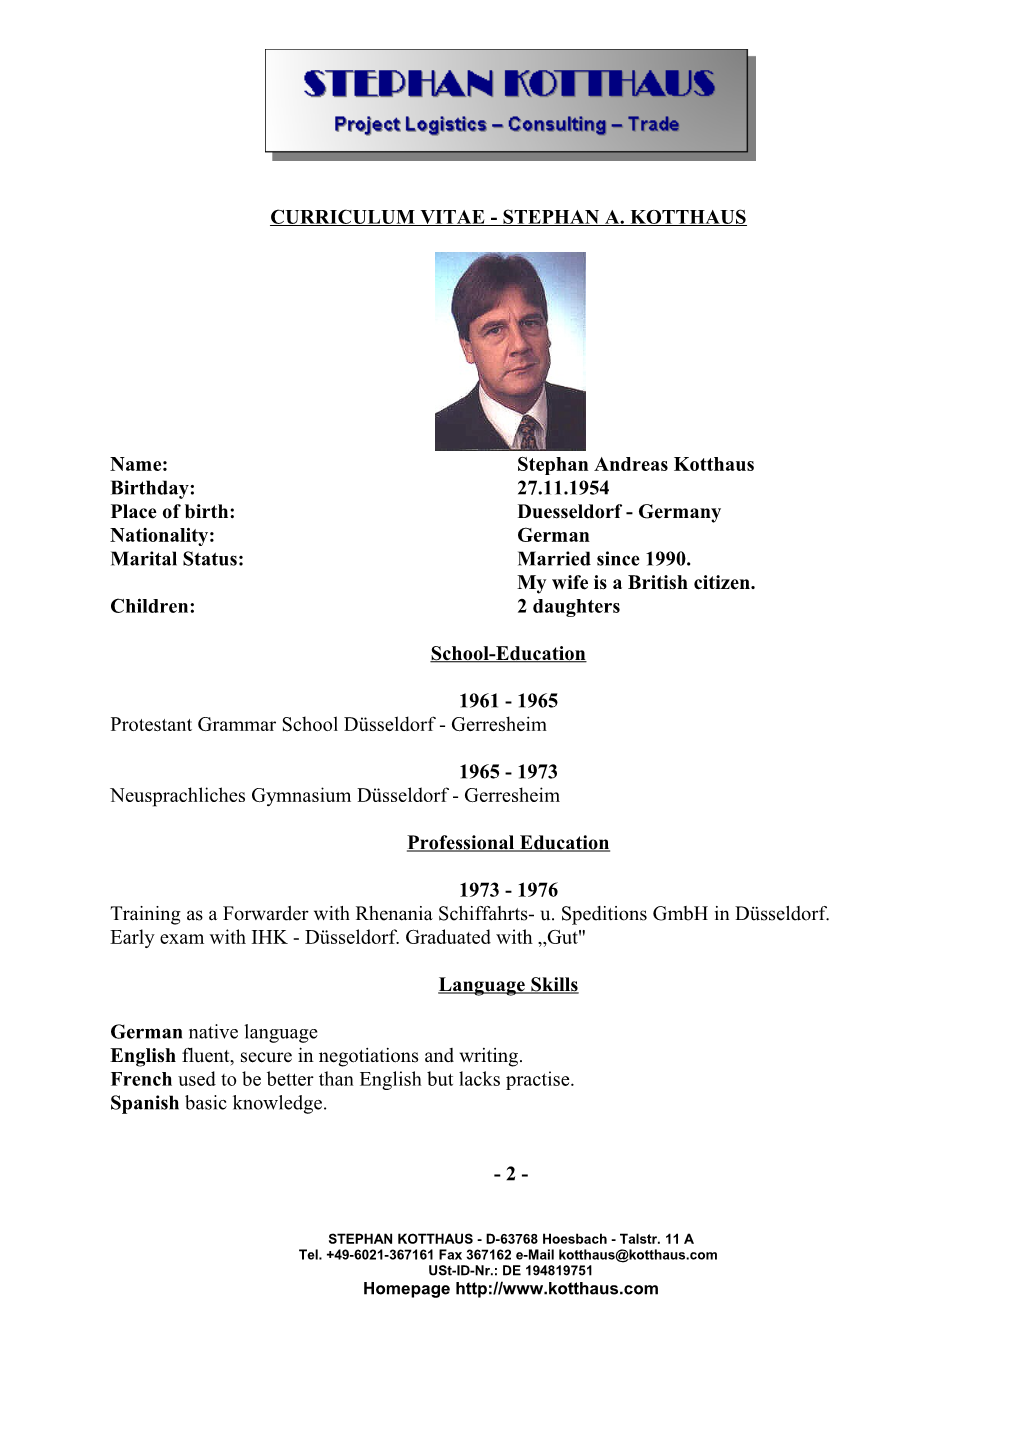 CV of Stephan Kotthaus